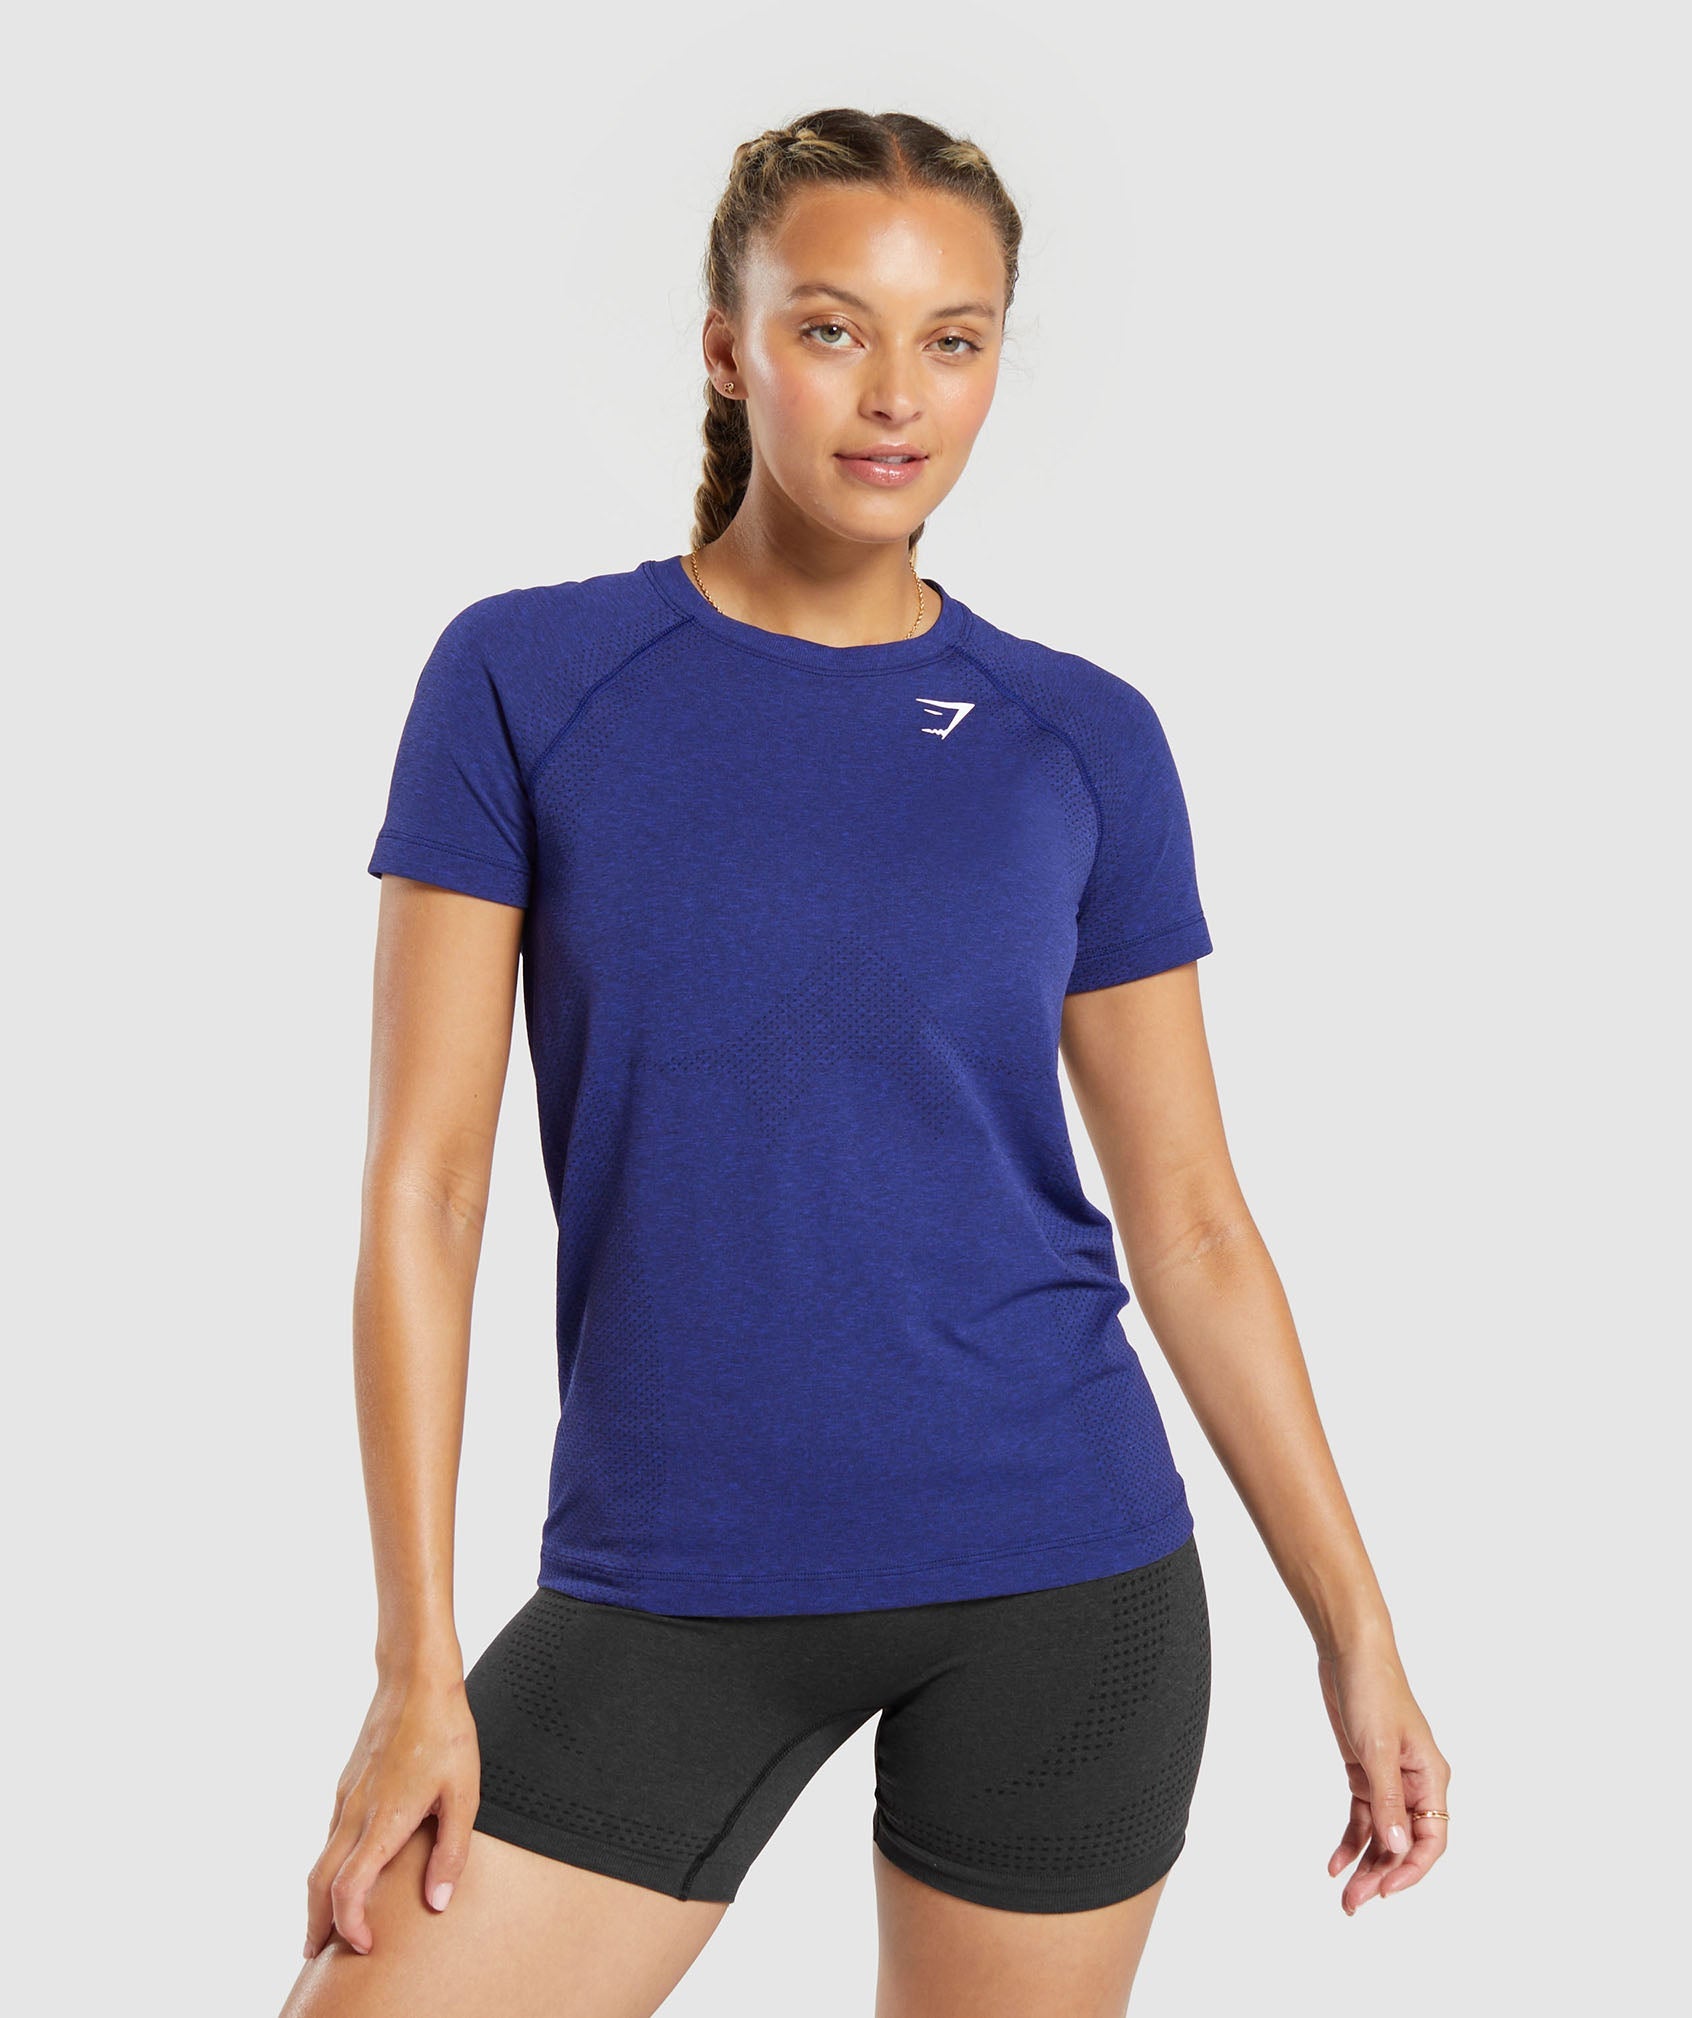 Vital Seamless 2.0 Light T-Shirt in Cobalt Purple Marl